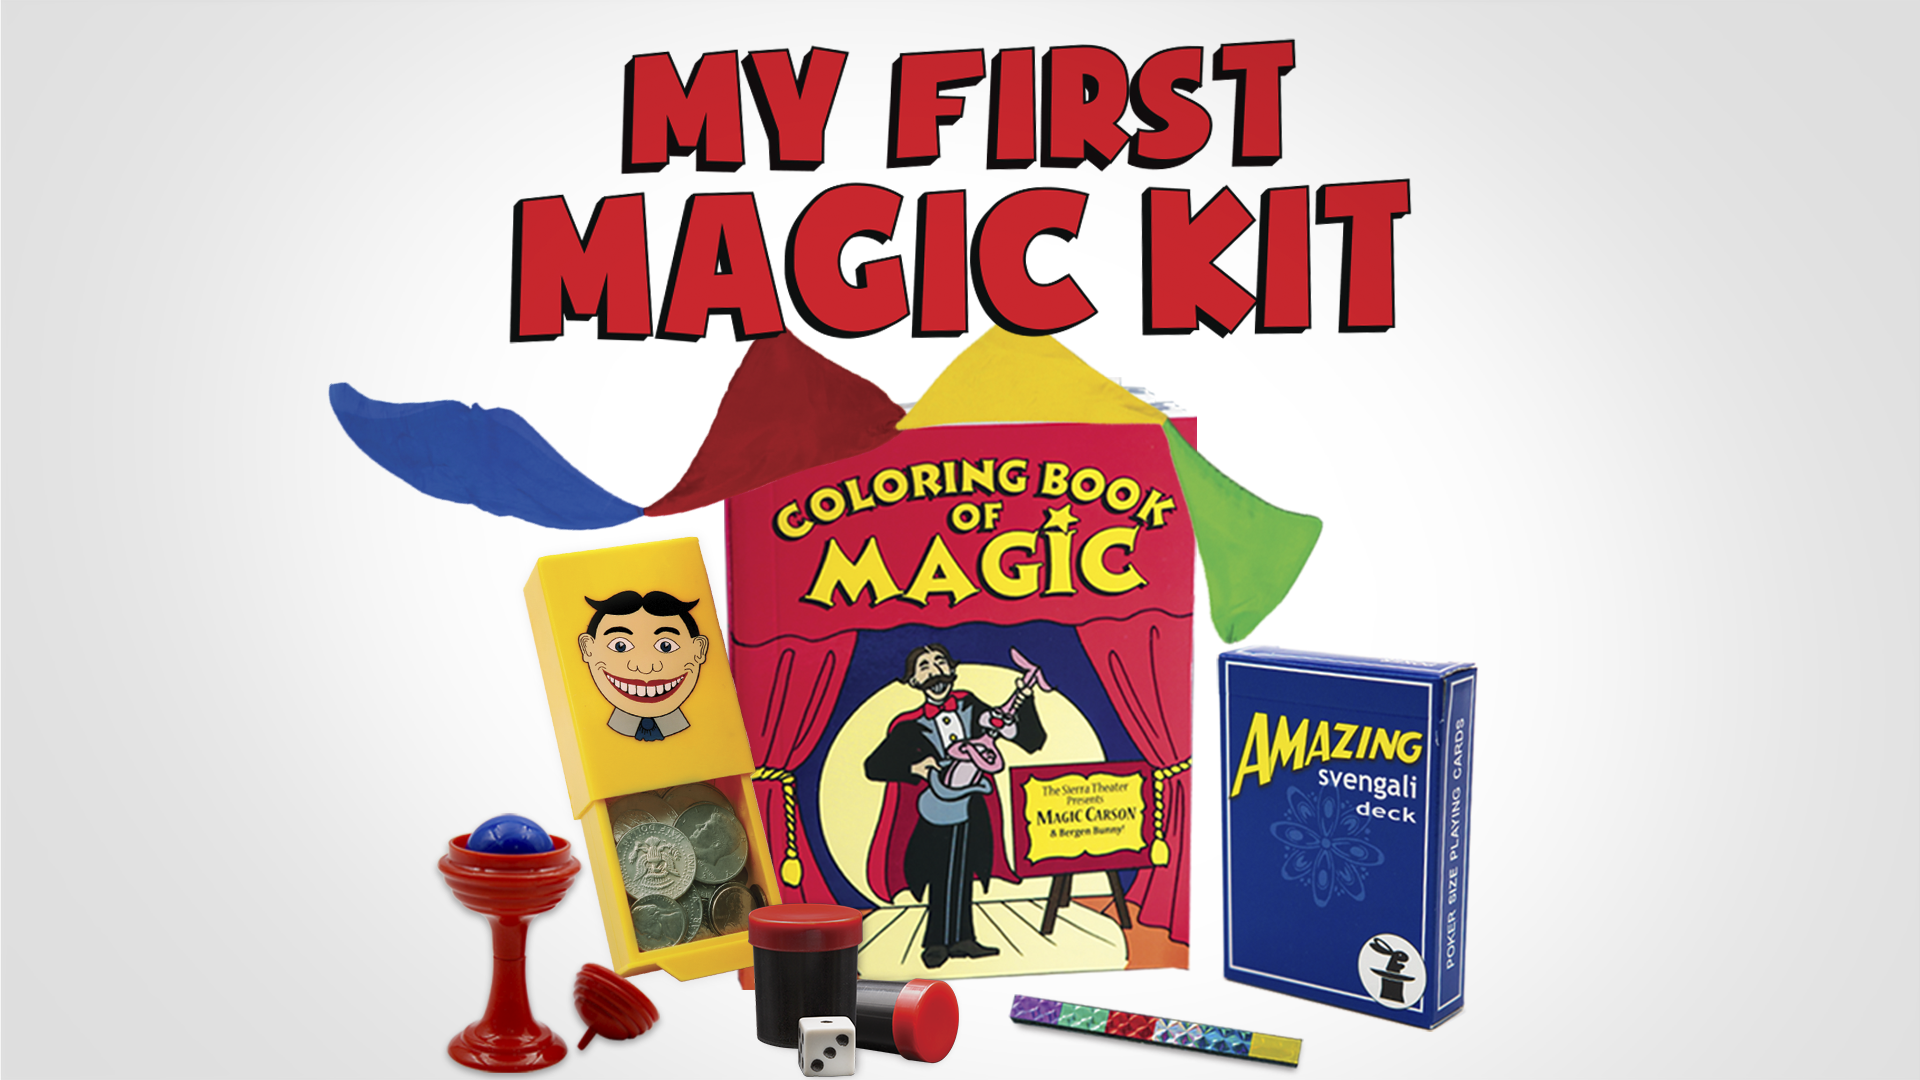 Magic Makers My First Magic Kit